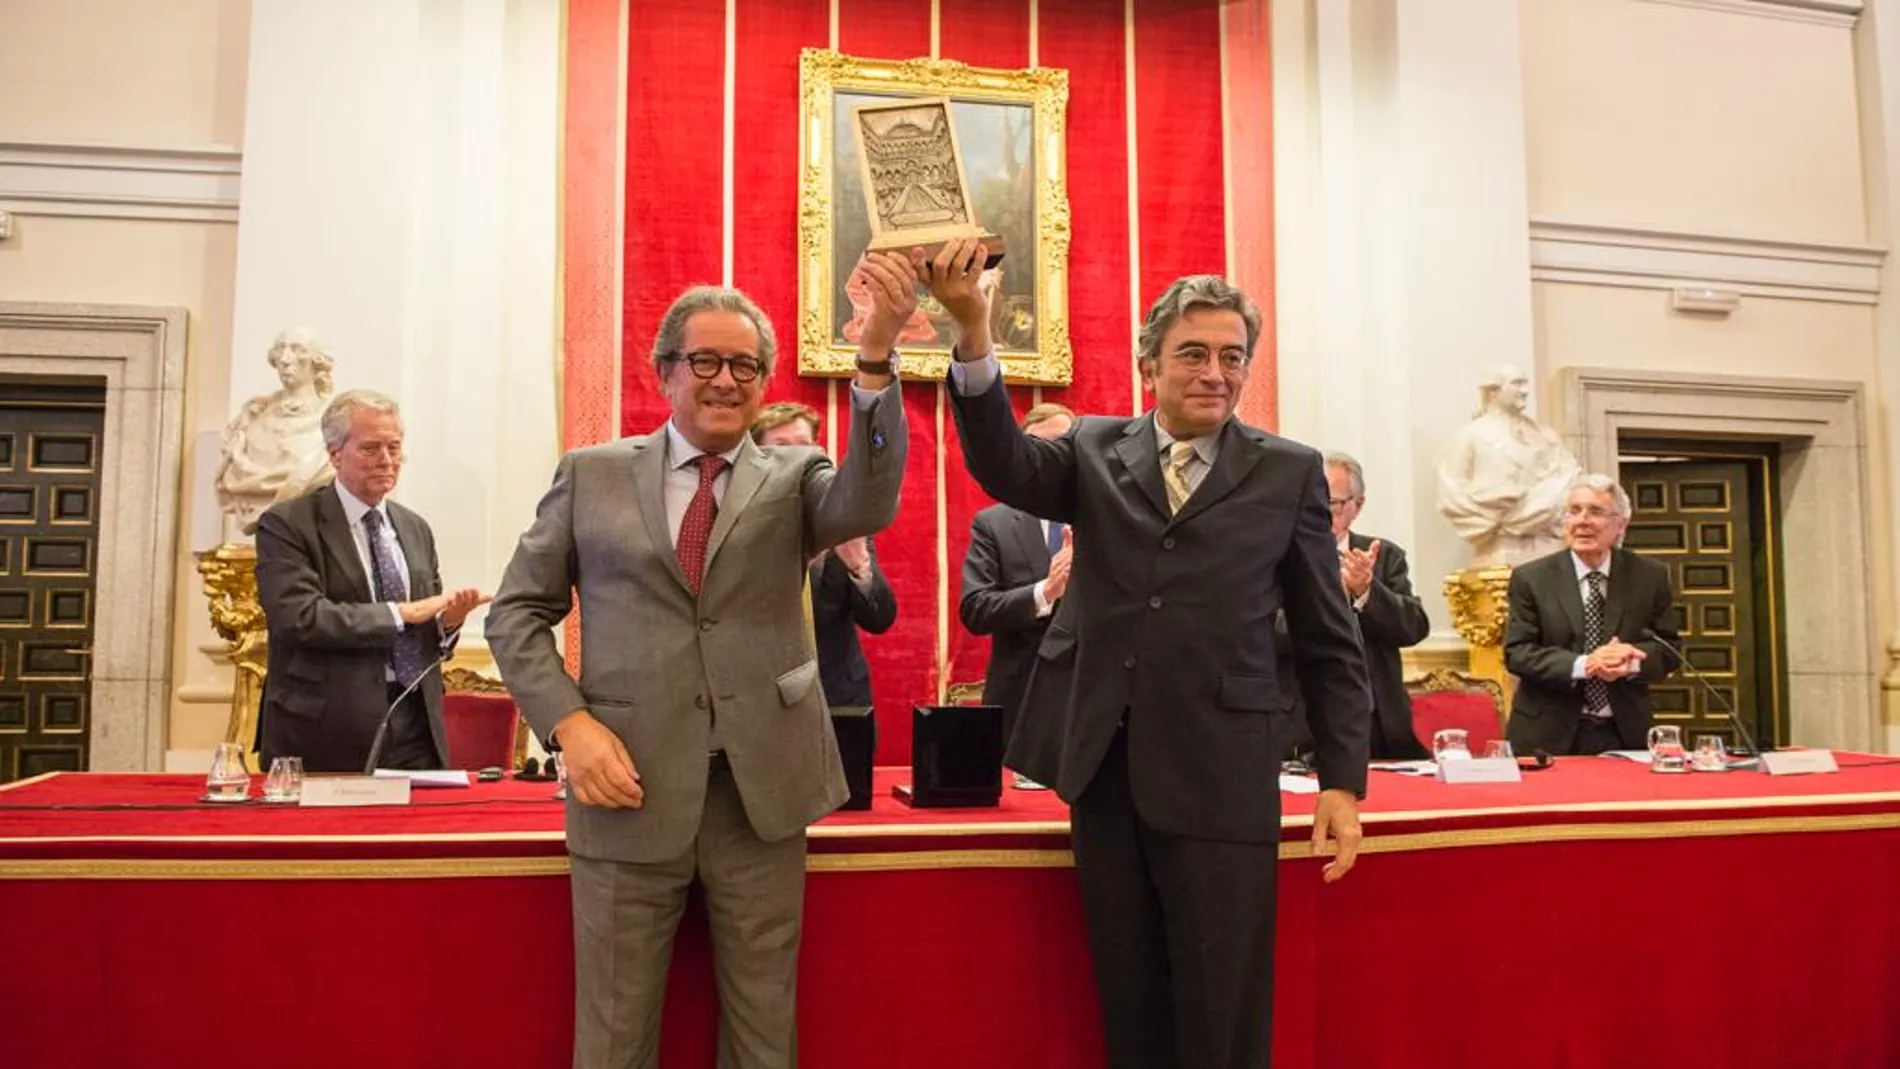 Antonio Almagro Gorbea y Antonio Jiménez Martínez recogen la Medalla Richard H. Driehaus.